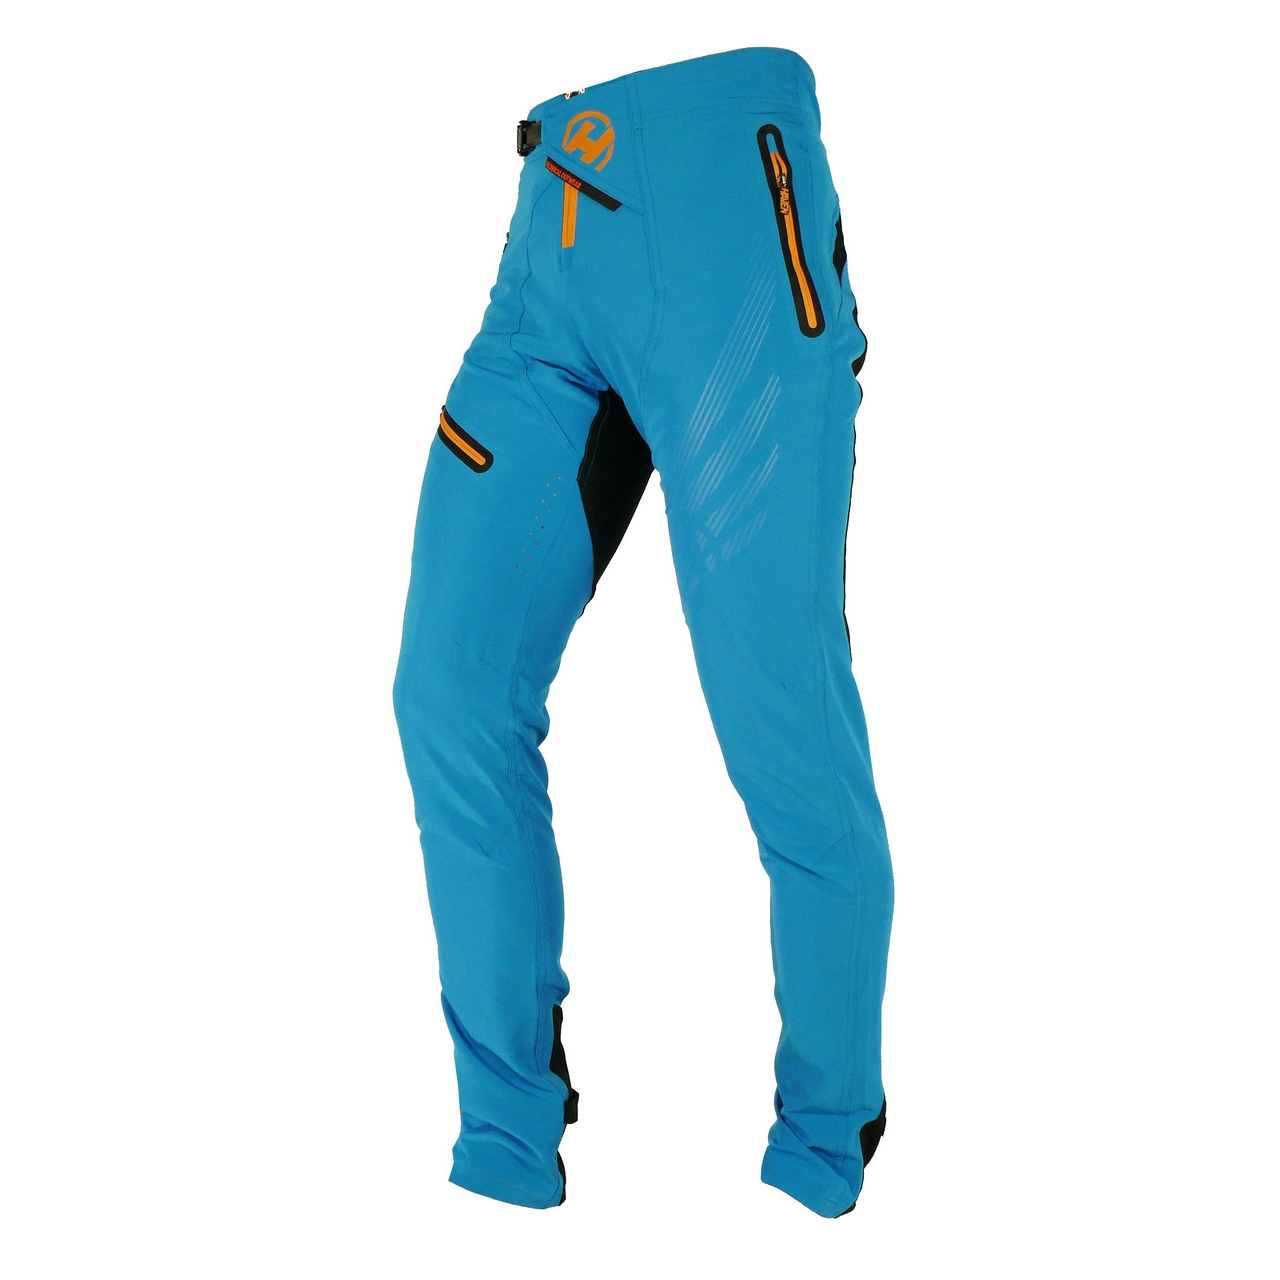 Kalhoty unisex Haven Energizer - modré-oranžové, M